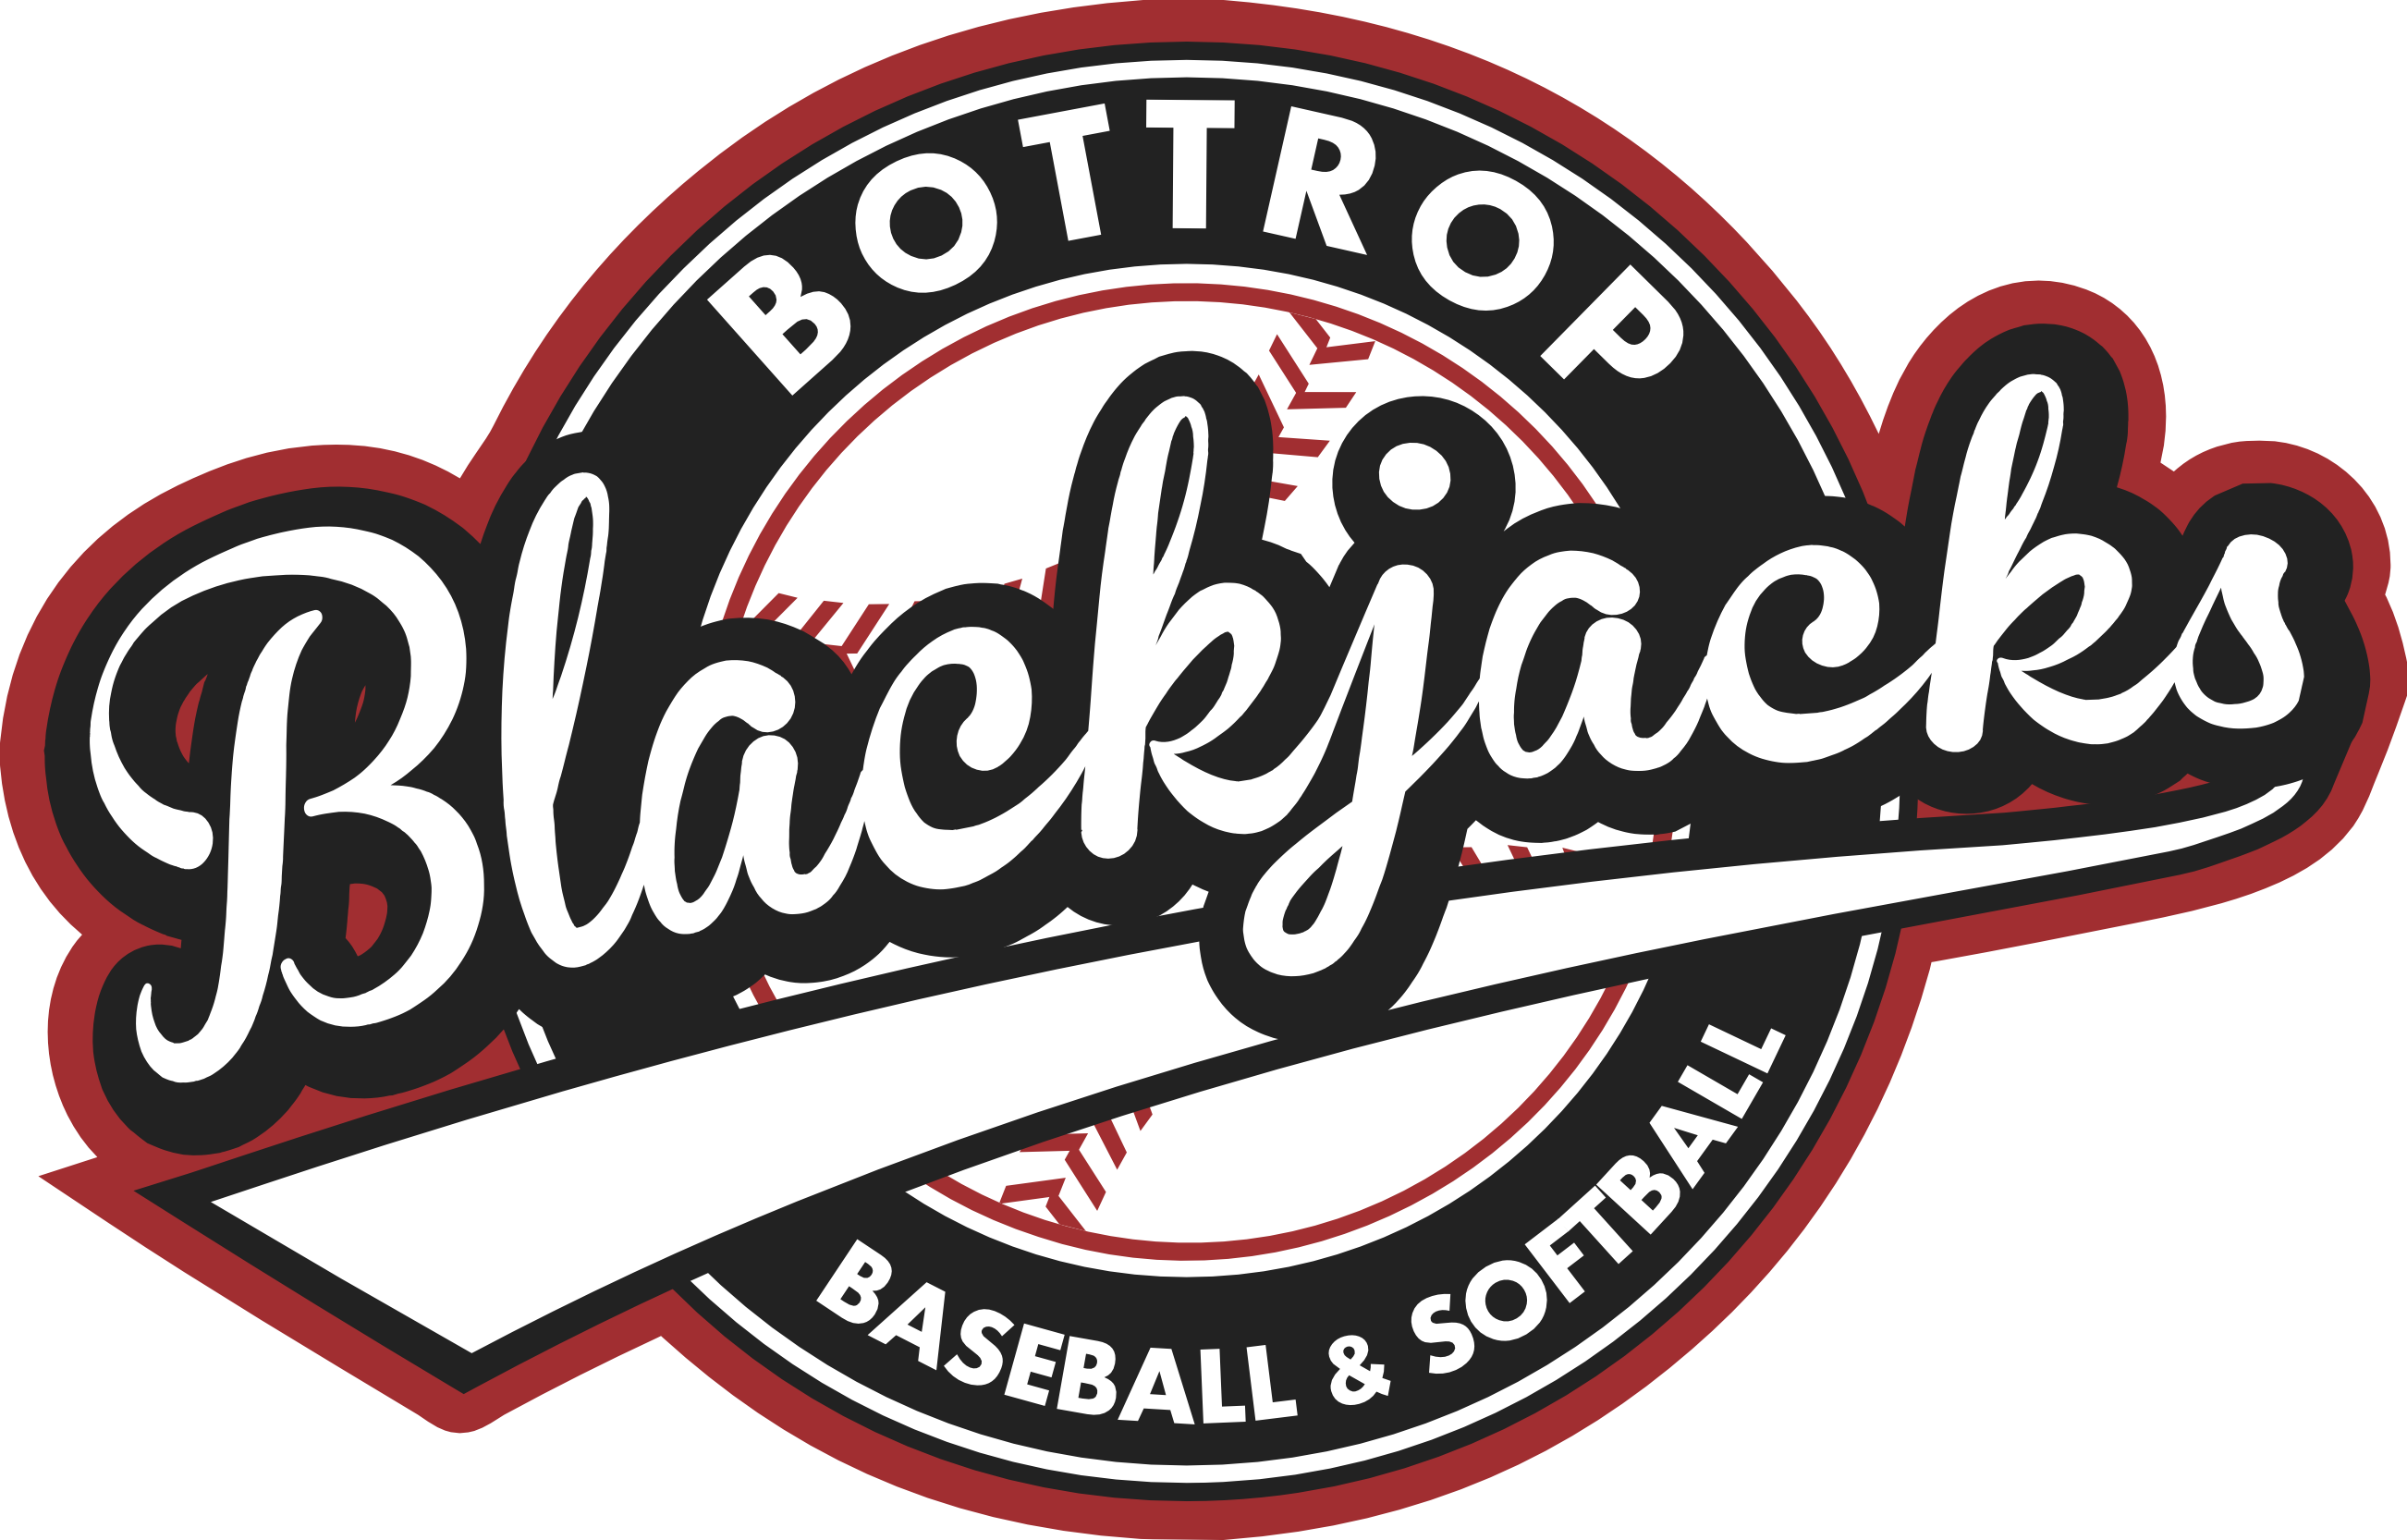 Bottrop Blackjacks